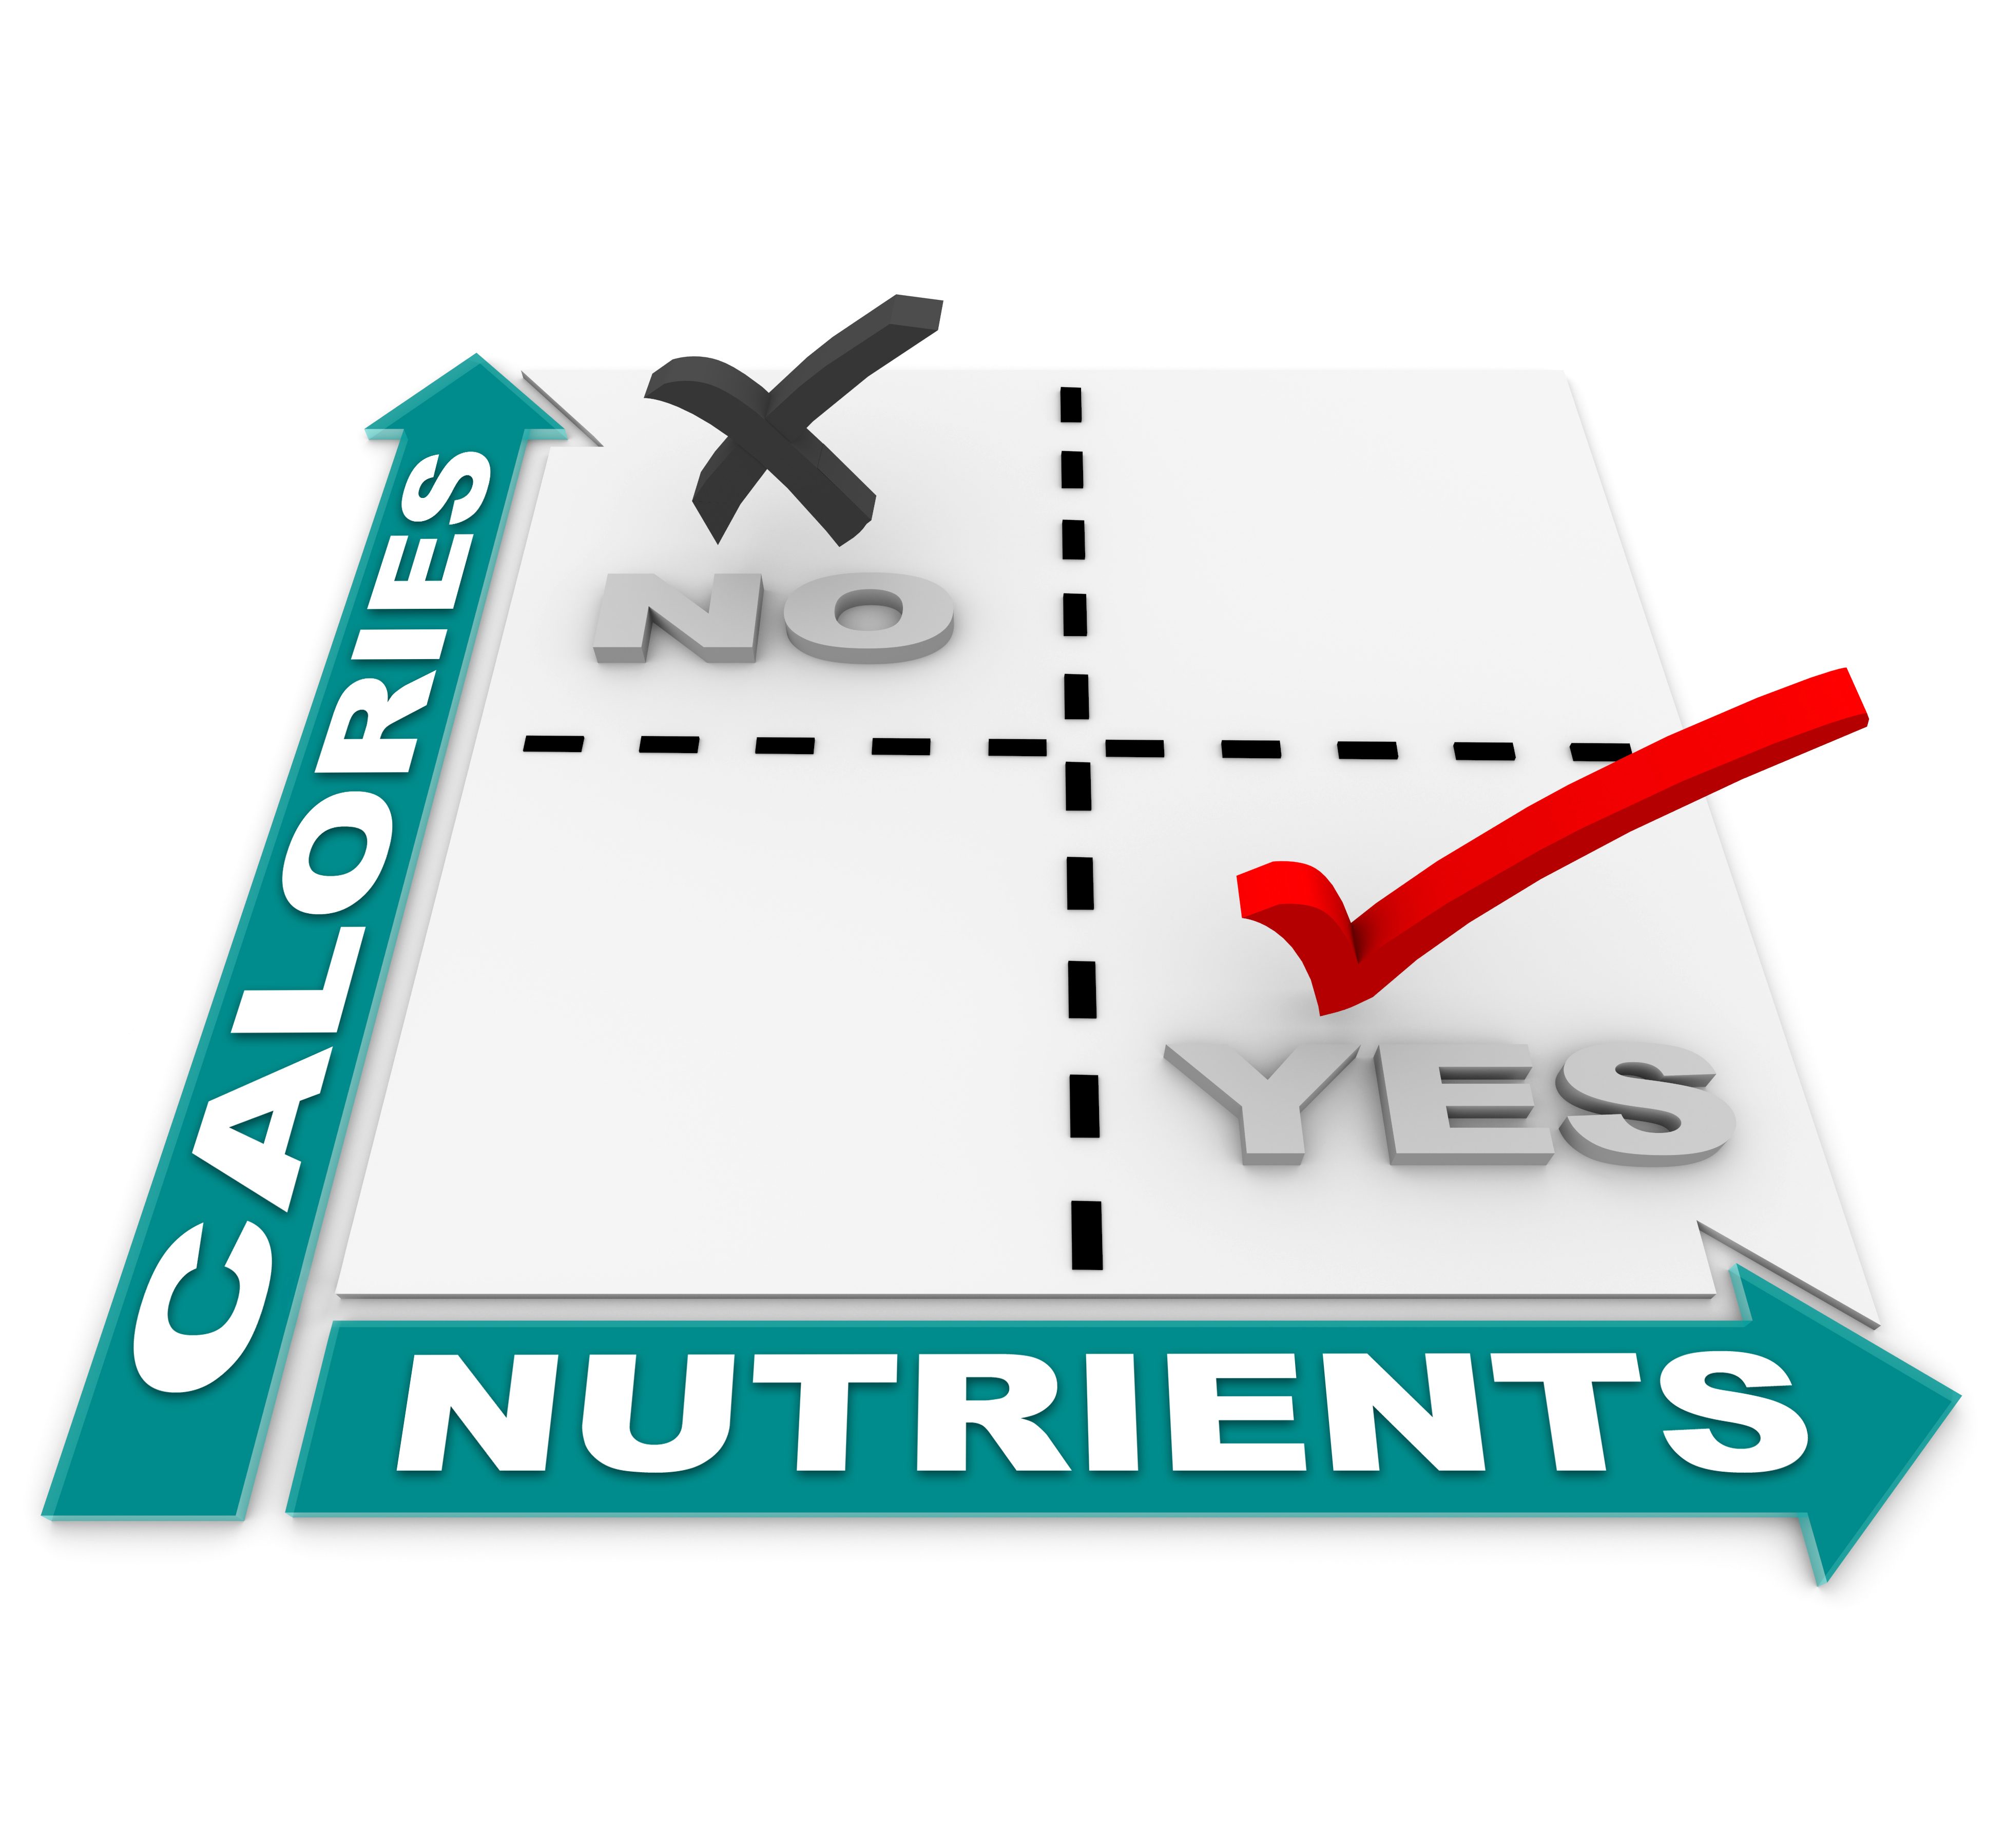 Nutrition Vs Calories Matrix   Diet Of The Best Foods